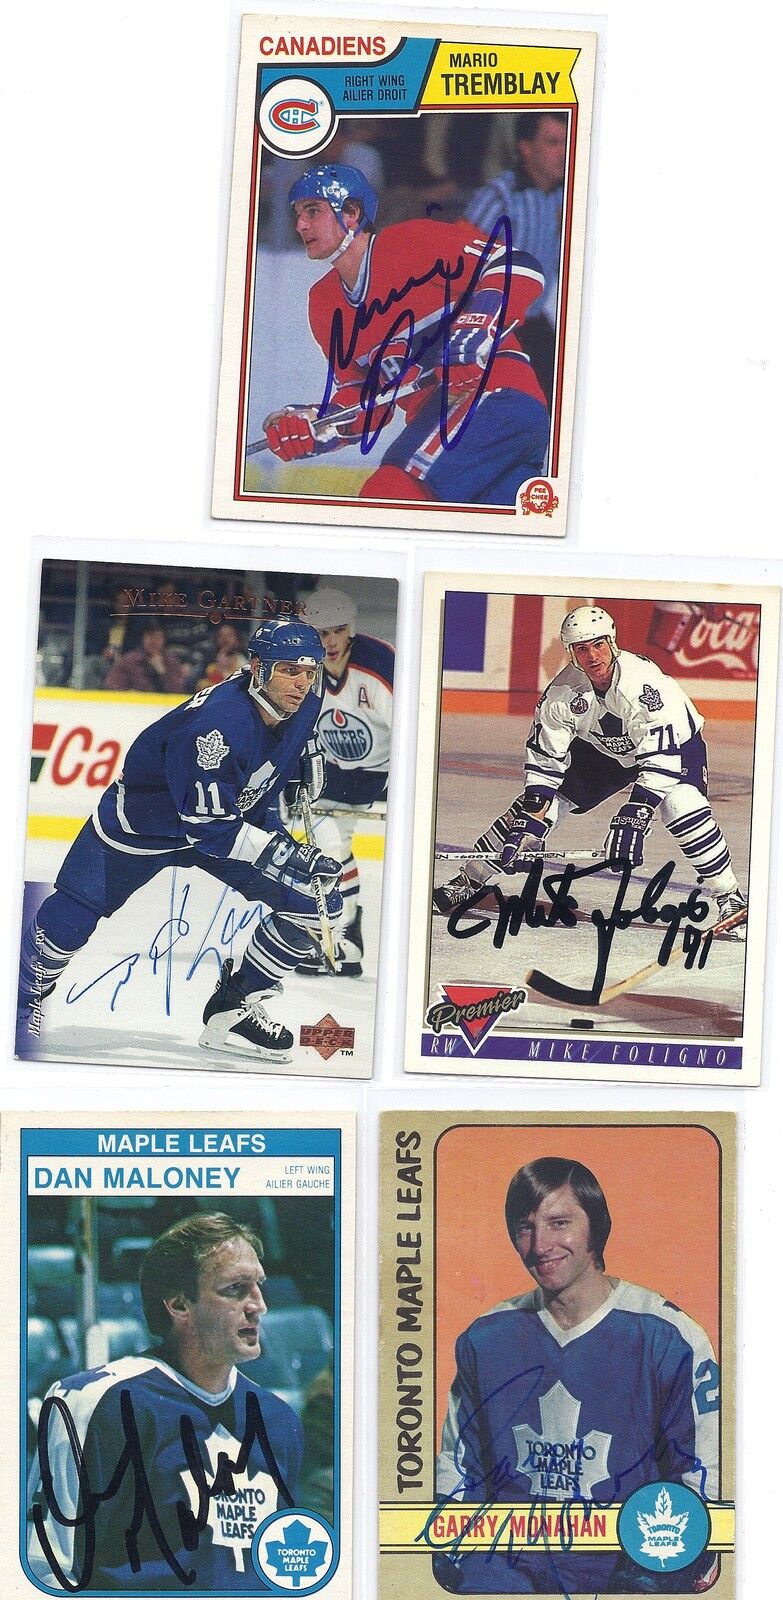 1972 OPC #207 Garry Monahan Toronto Maple Leafs Autographed Hockey Card